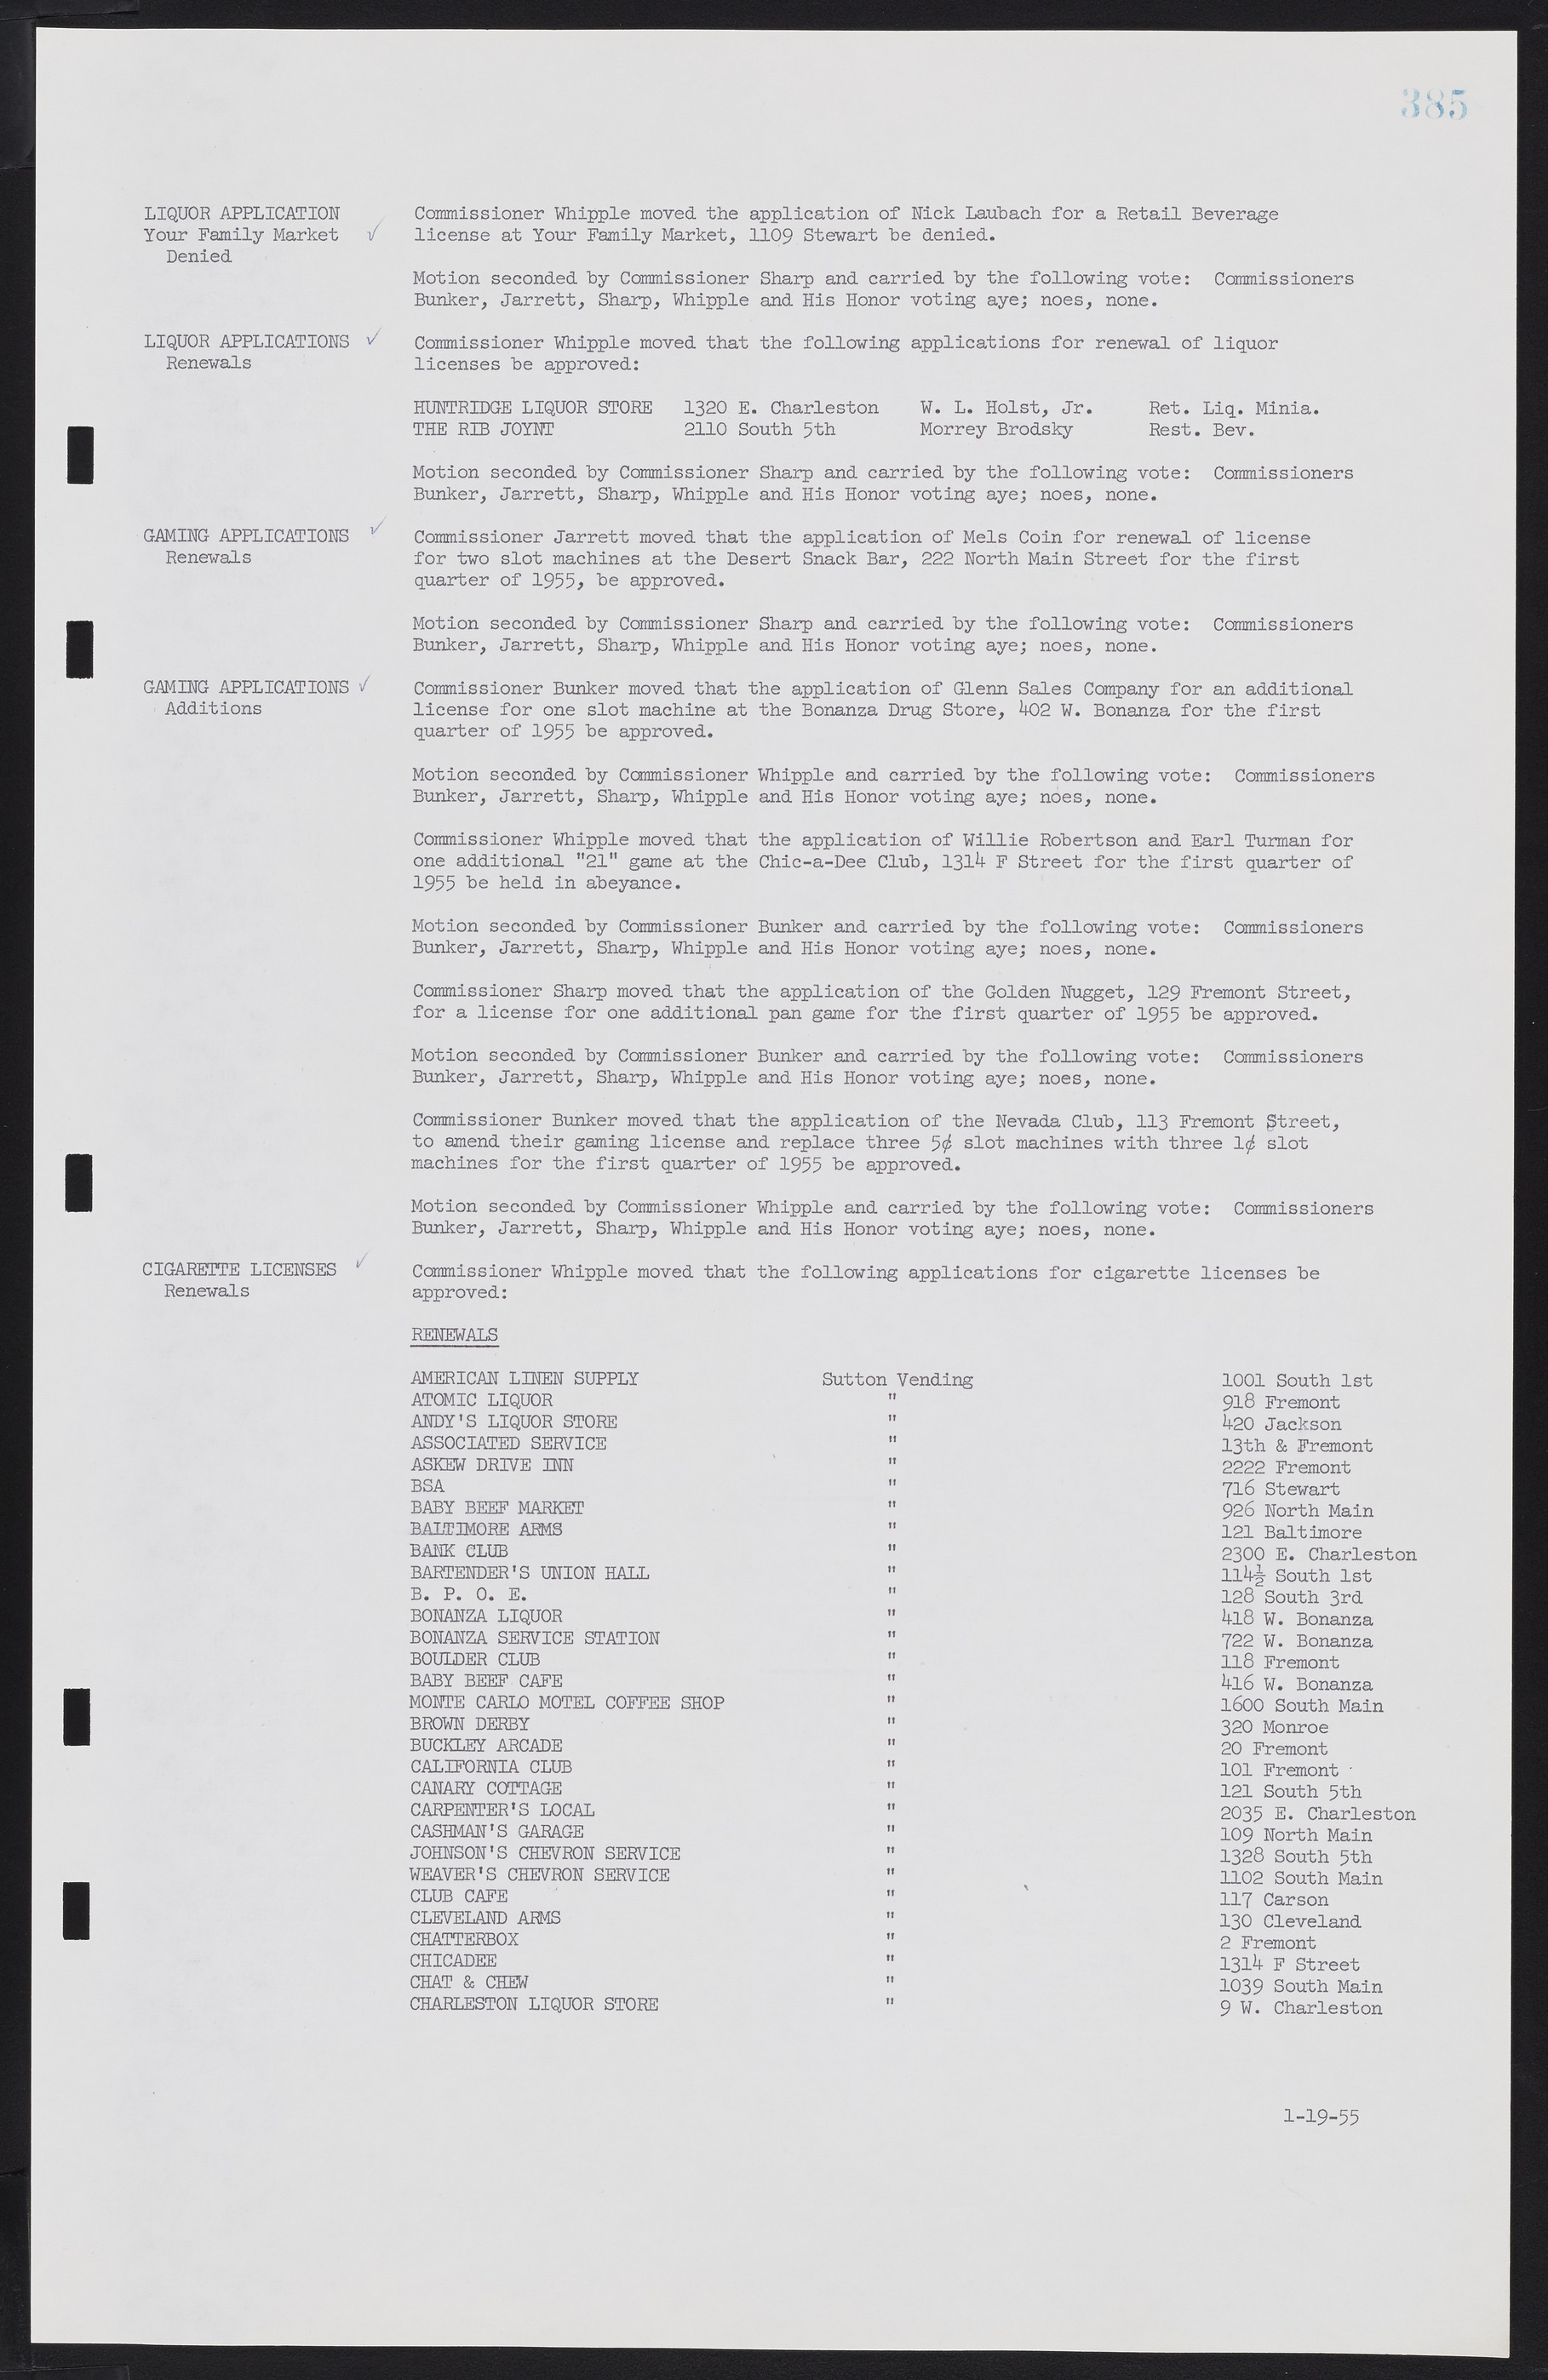 Las Vegas City Commission Minutes, February 17, 1954 to September 21, 1955, lvc000009-391